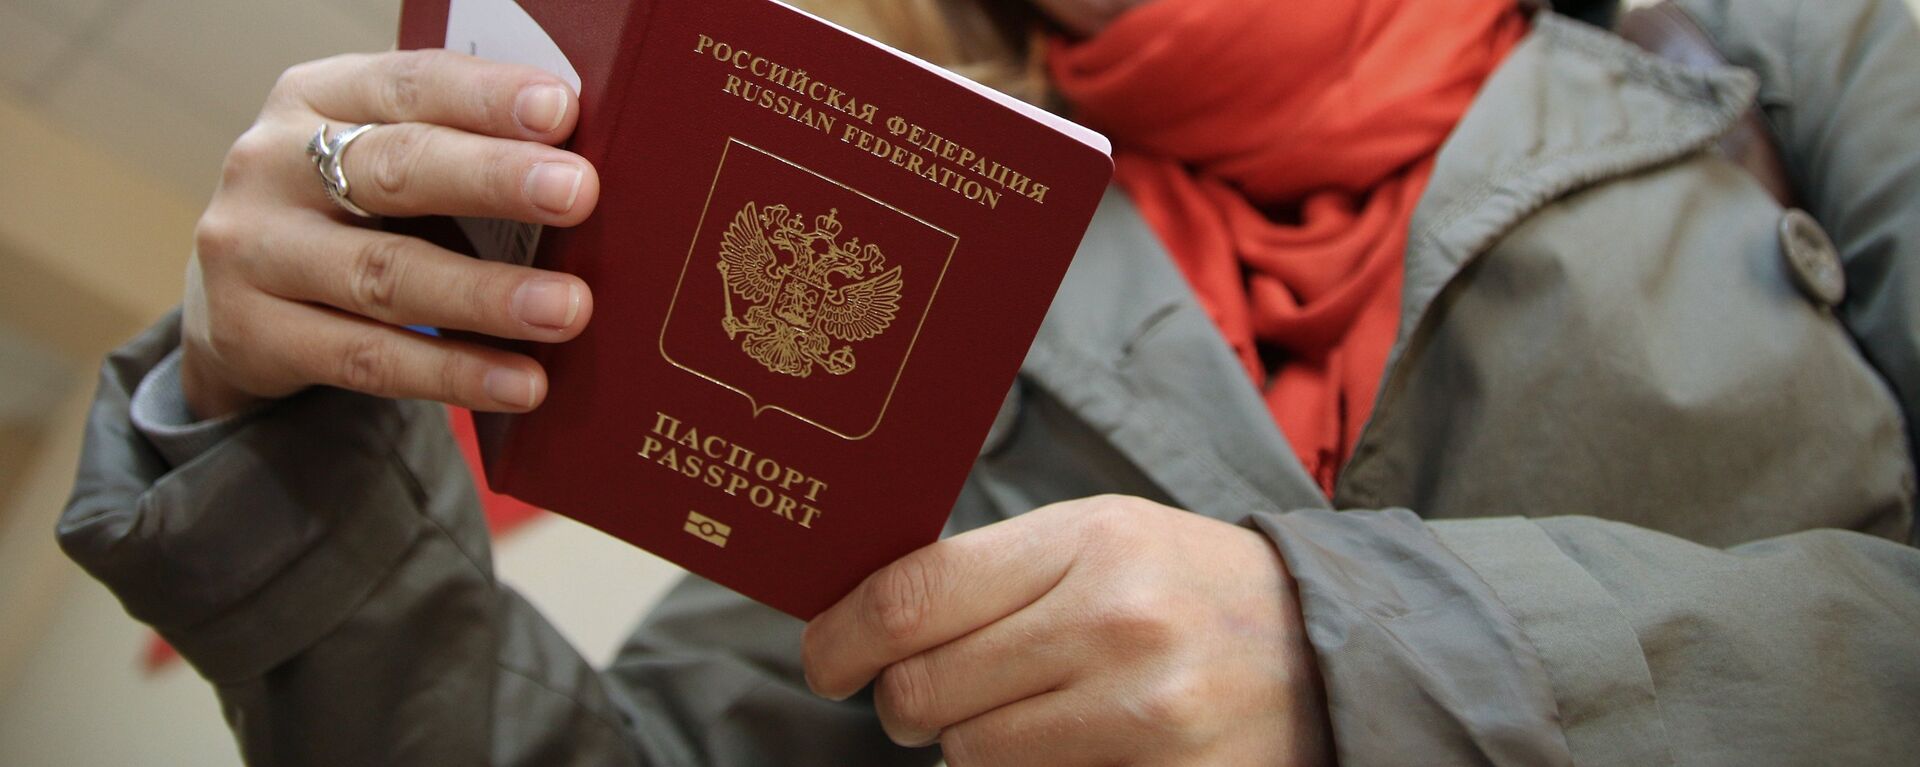 El pasaporte ruso - Sputnik Mundo, 1920, 28.07.2022